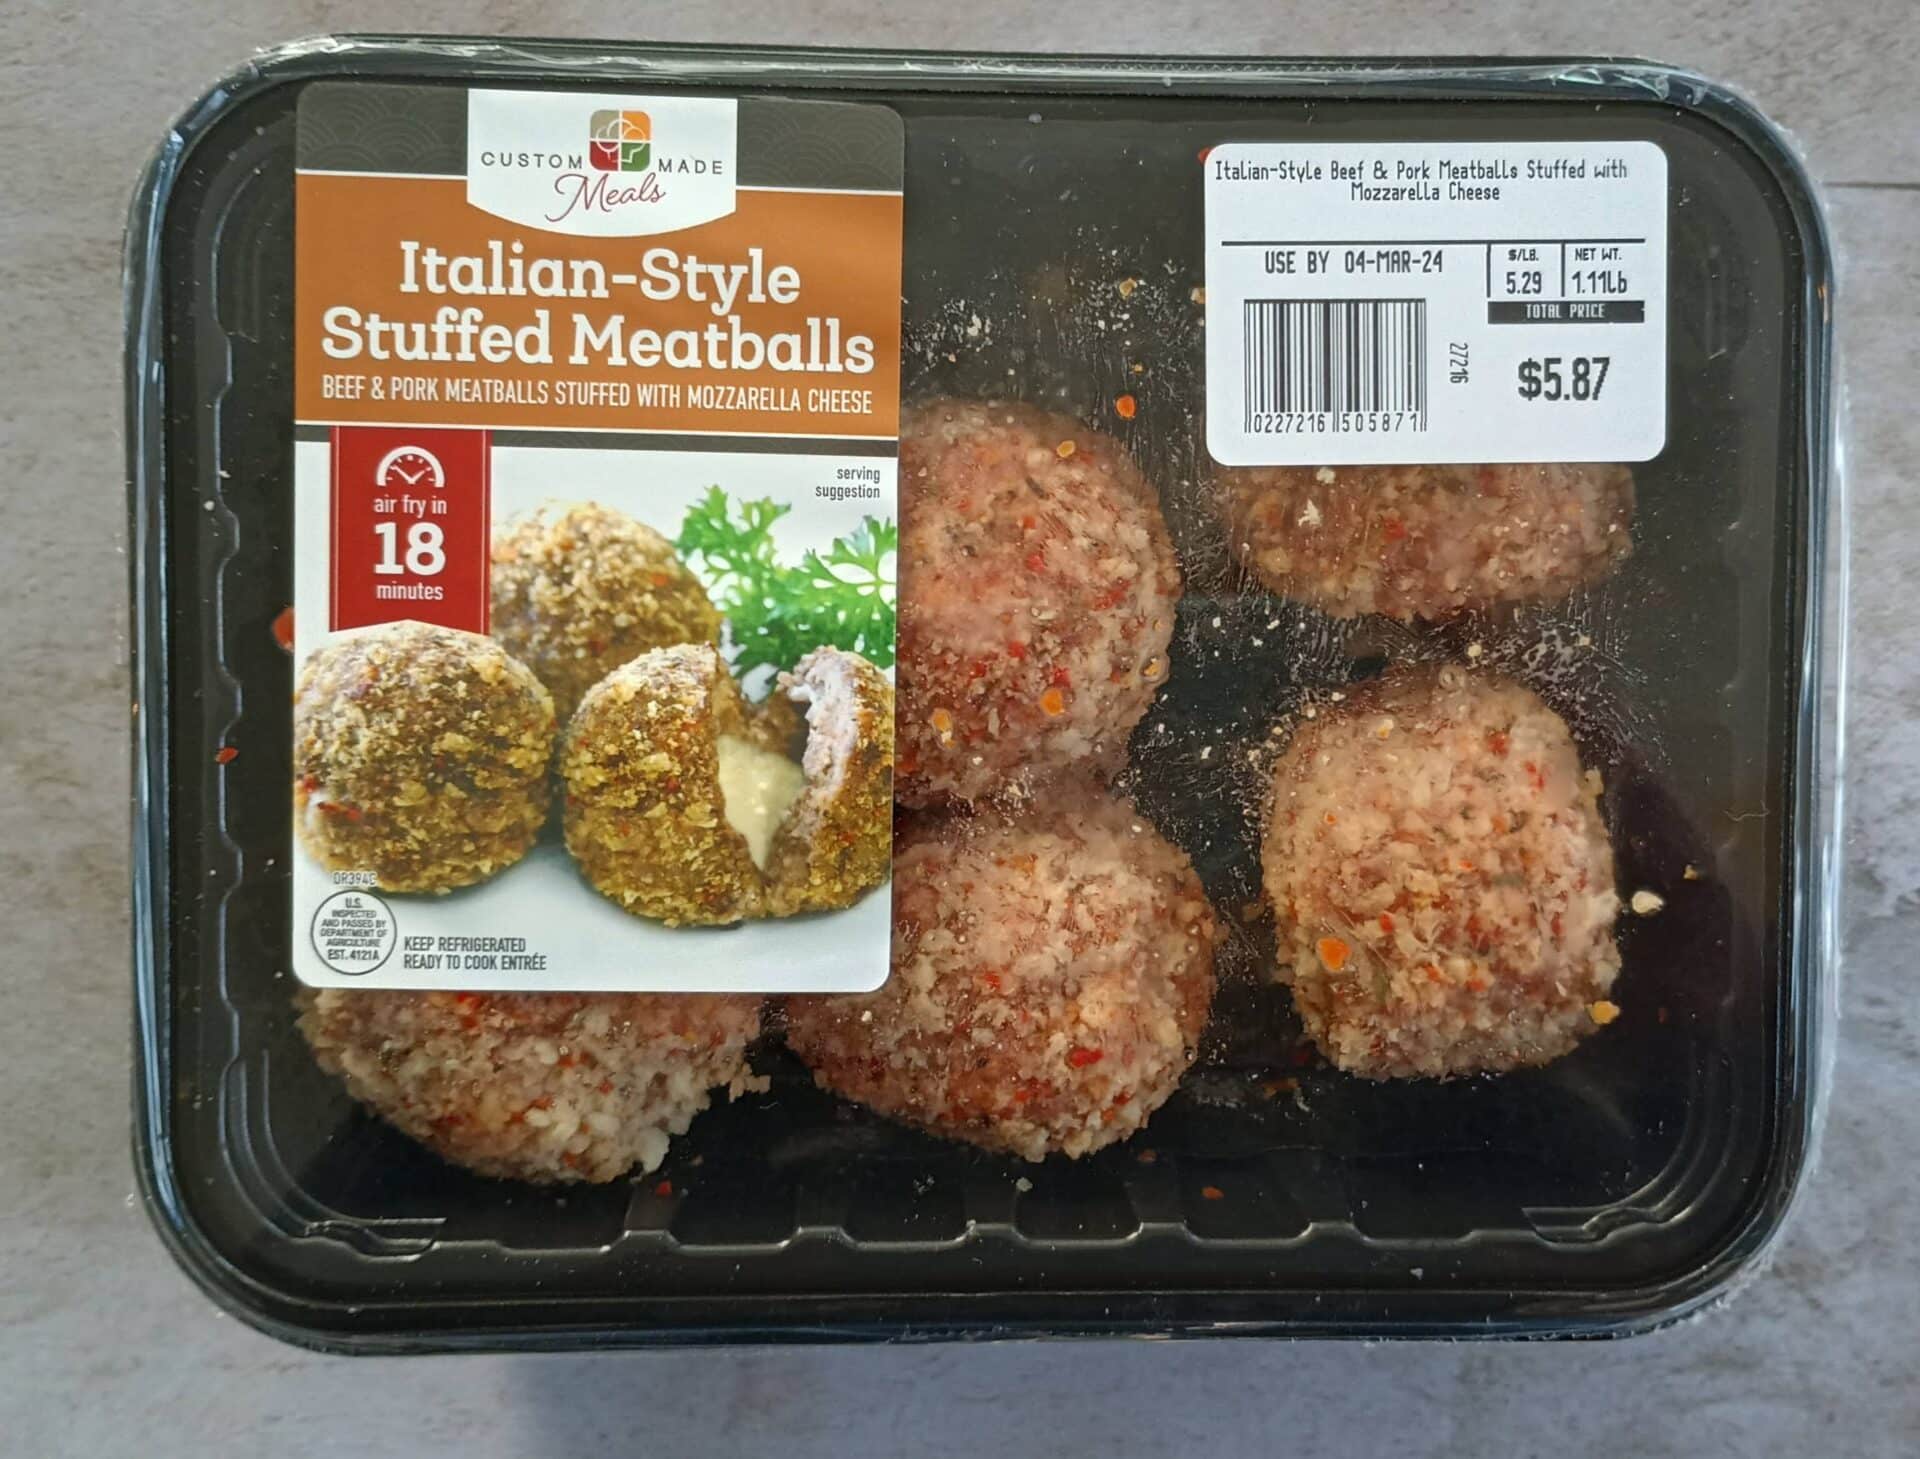 Custom Made Meals Italian-Style Stuffed Meatballs